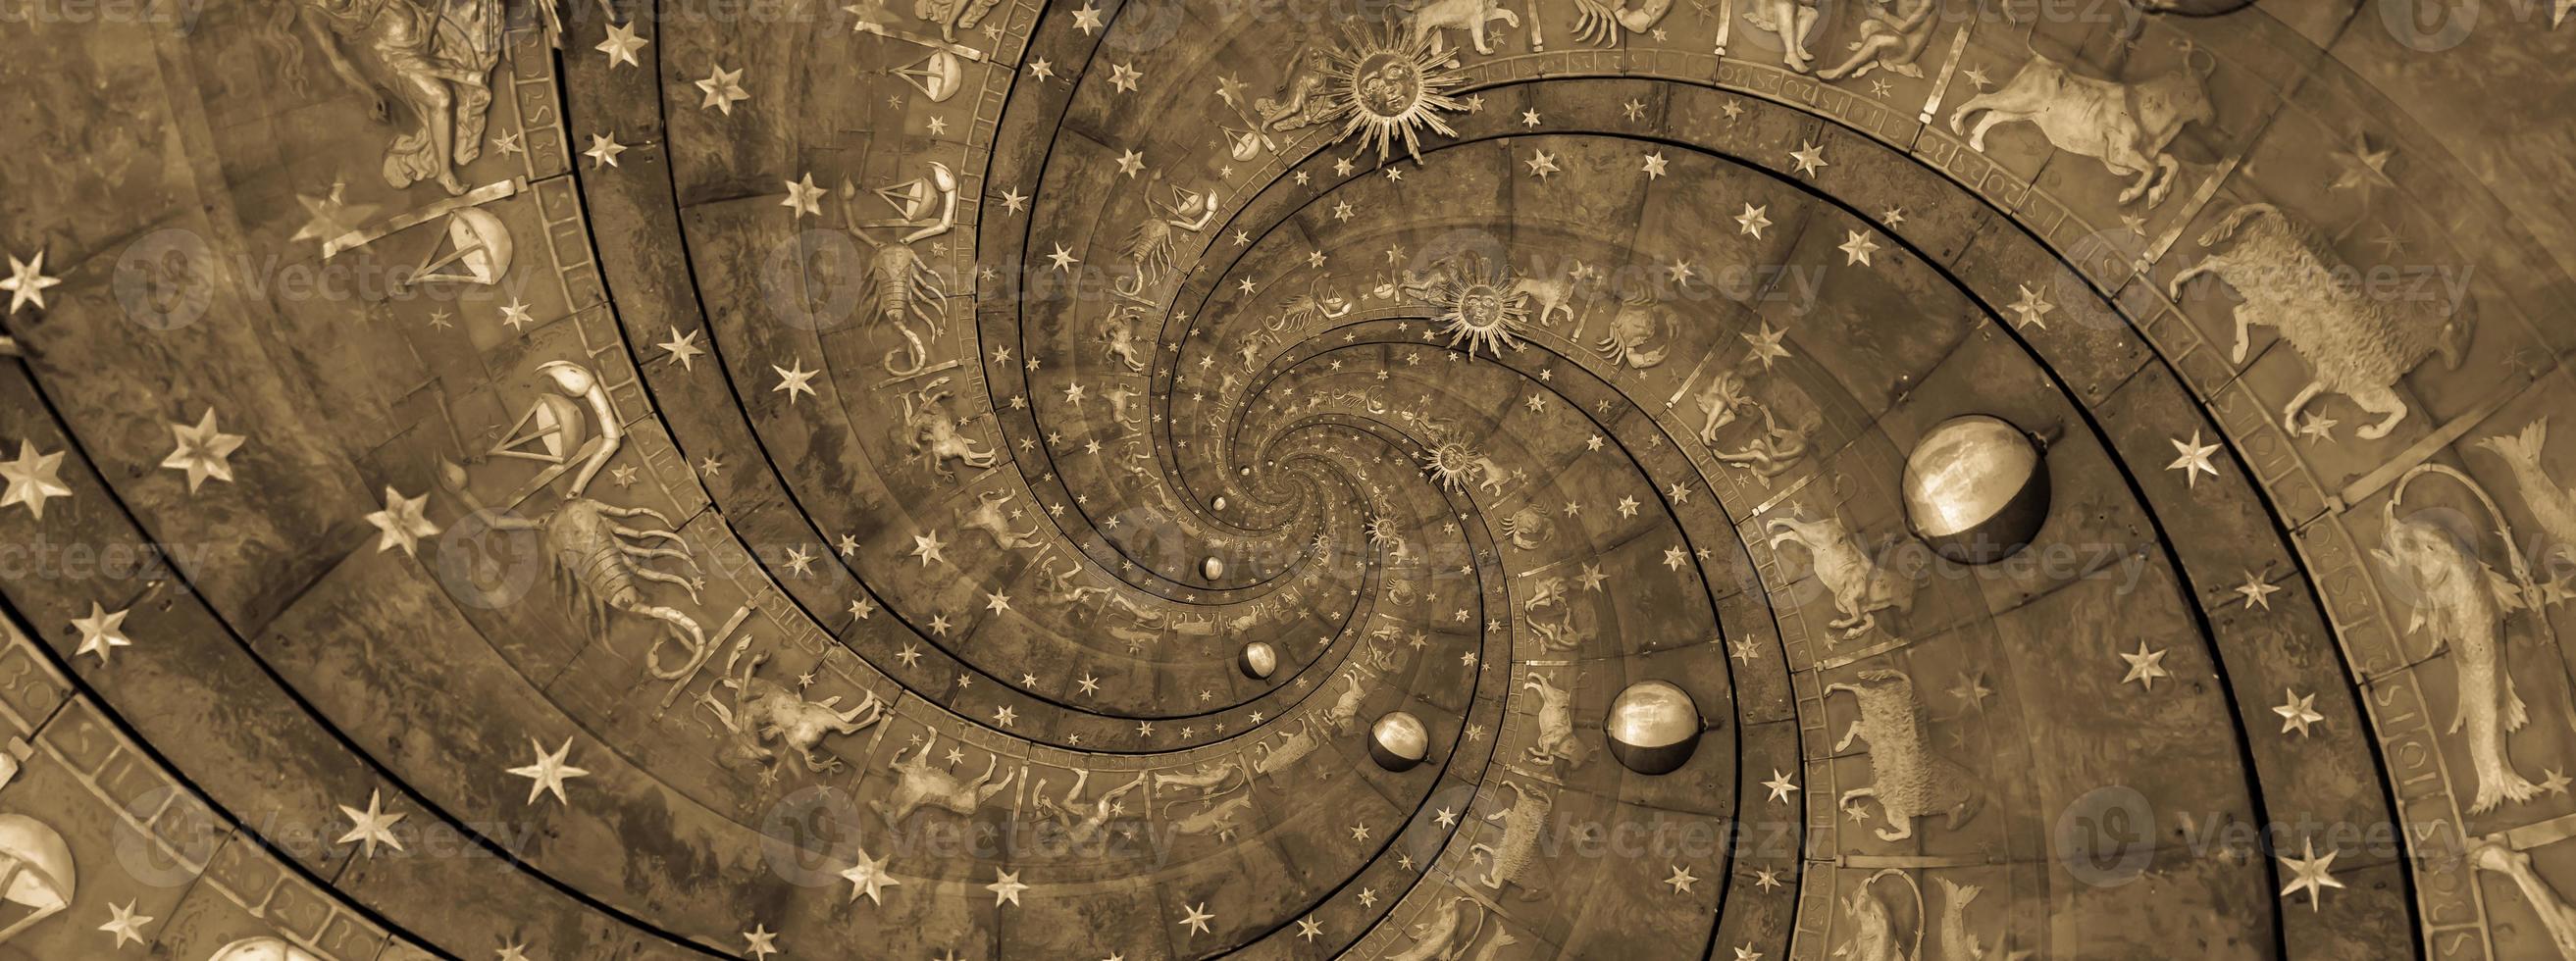 abstracte oude conceptuele achtergrond over mystiek, astrologie, fantasie foto